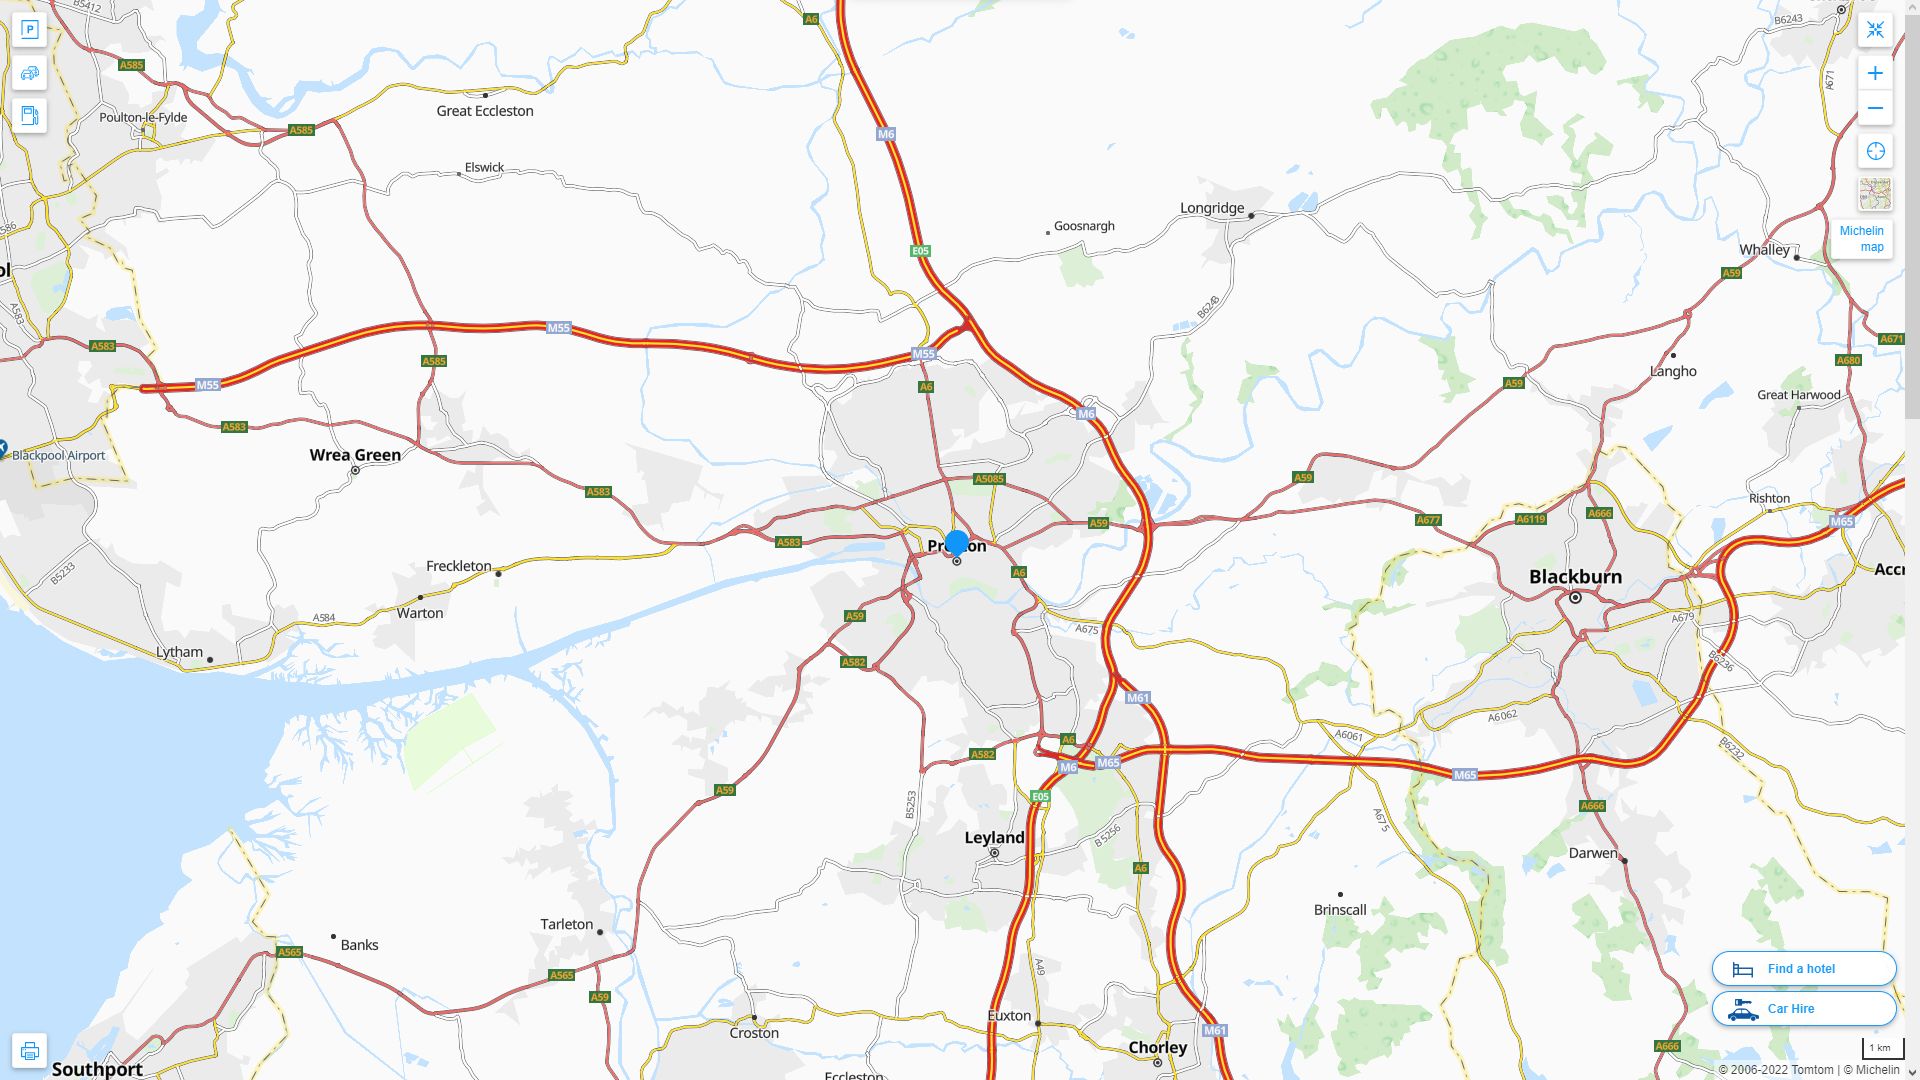 Preston Royaume Uni Autoroute et carte routiere